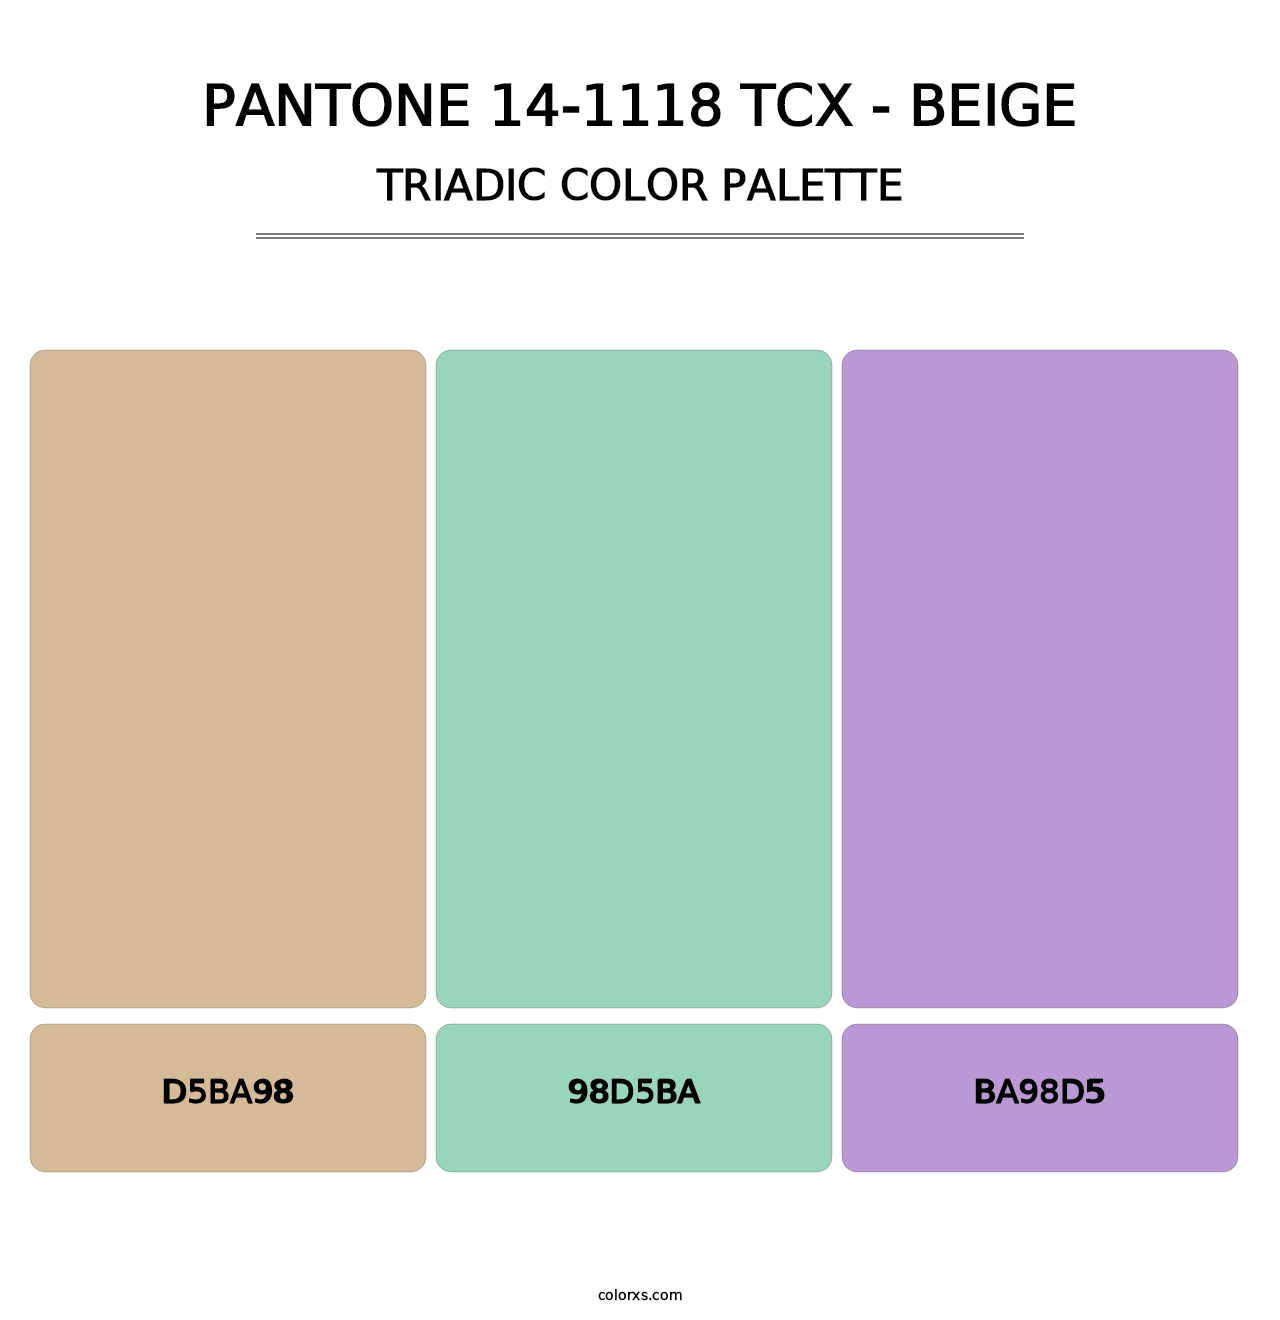 PANTONE 14-1118 TCX - Beige - Triadic Color Palette